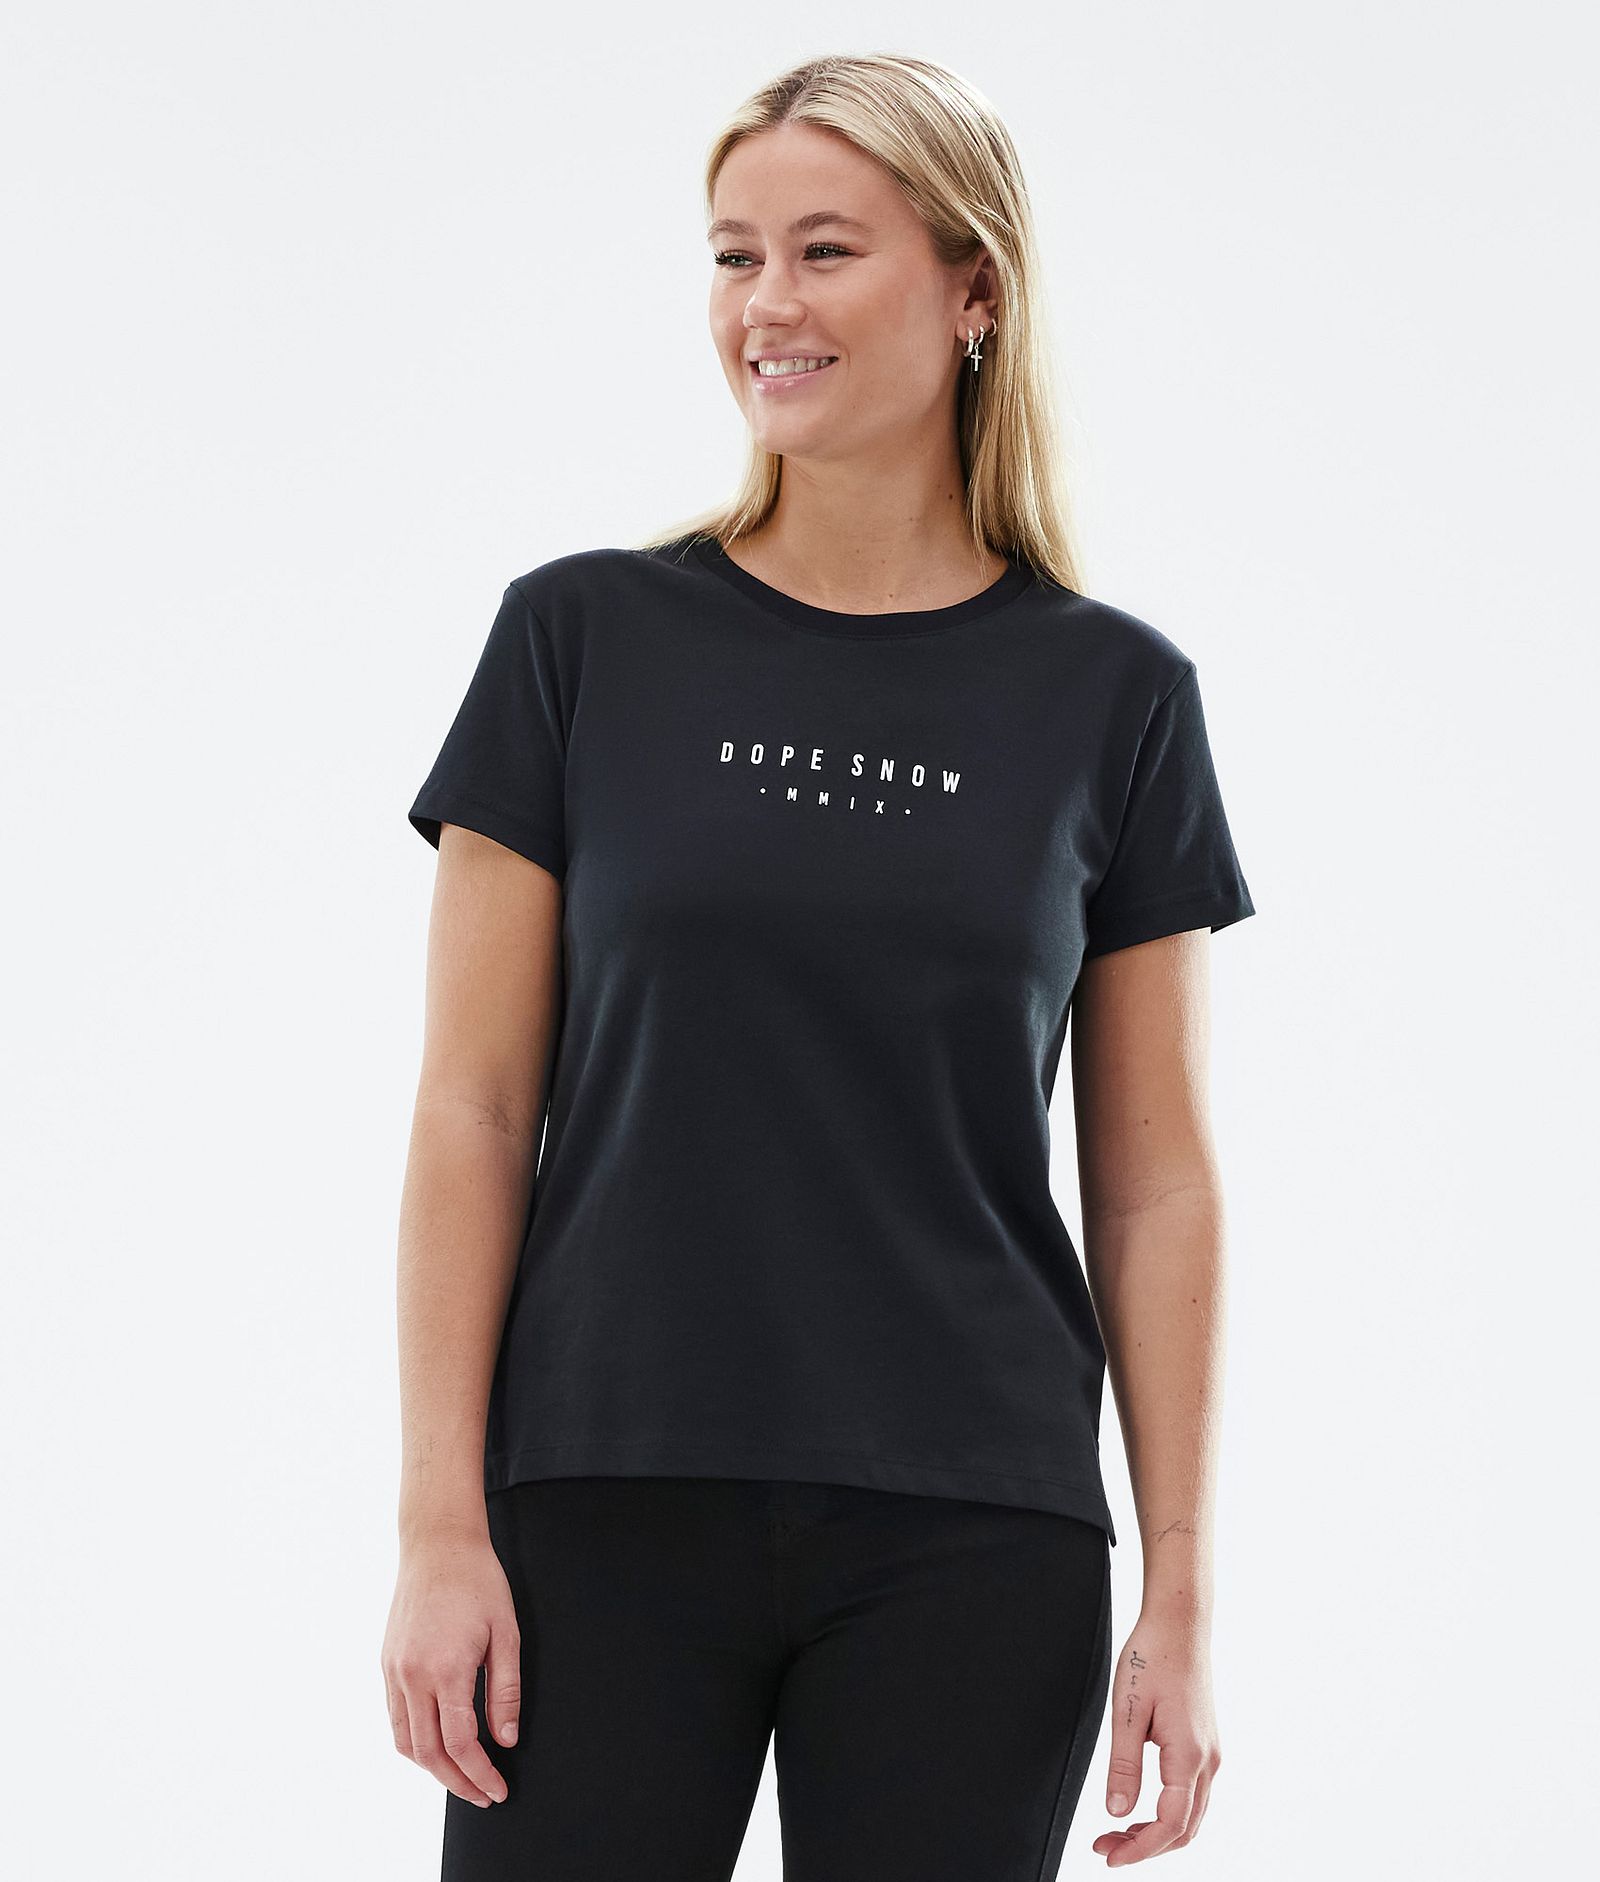 Standard W T-shirt Kobiety Silhouette Black